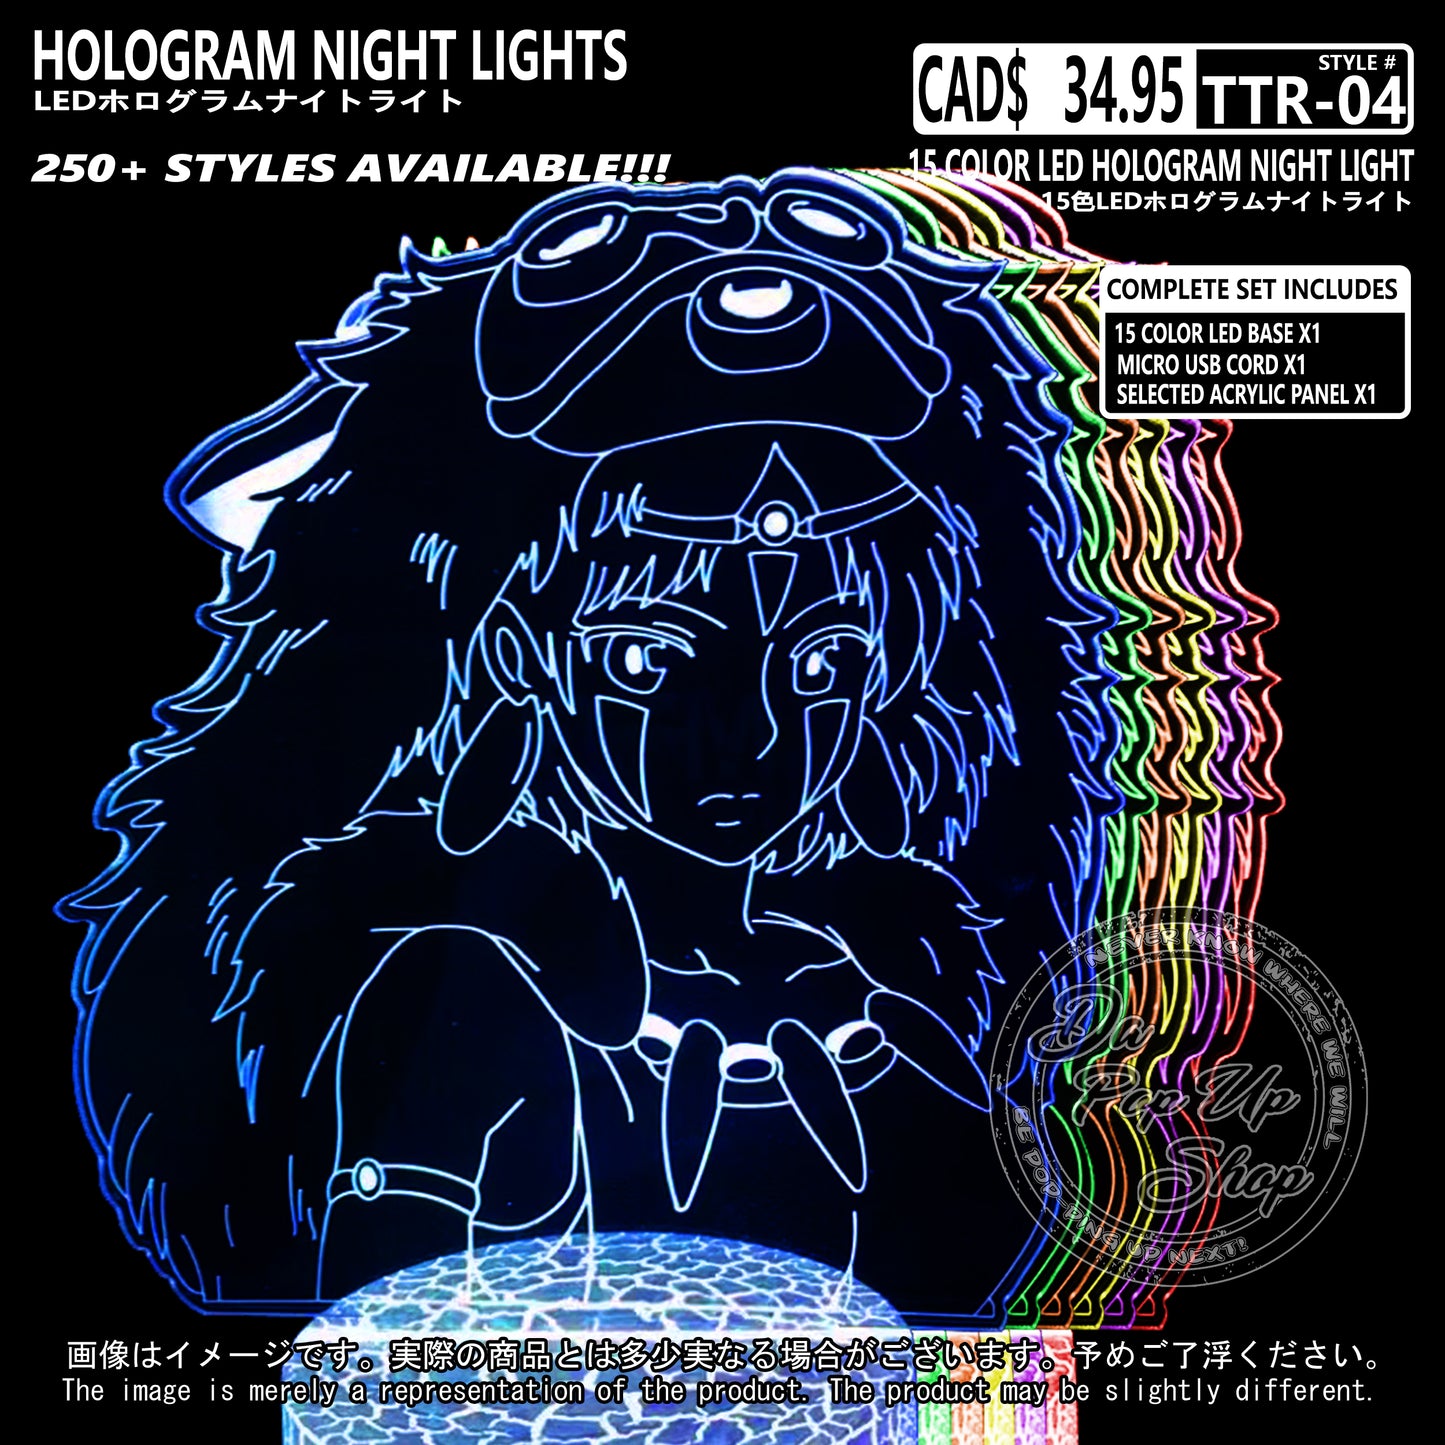 (TTR-04) PRINCESS MONONOKE Studio Ghibli Hologram LED Night Light